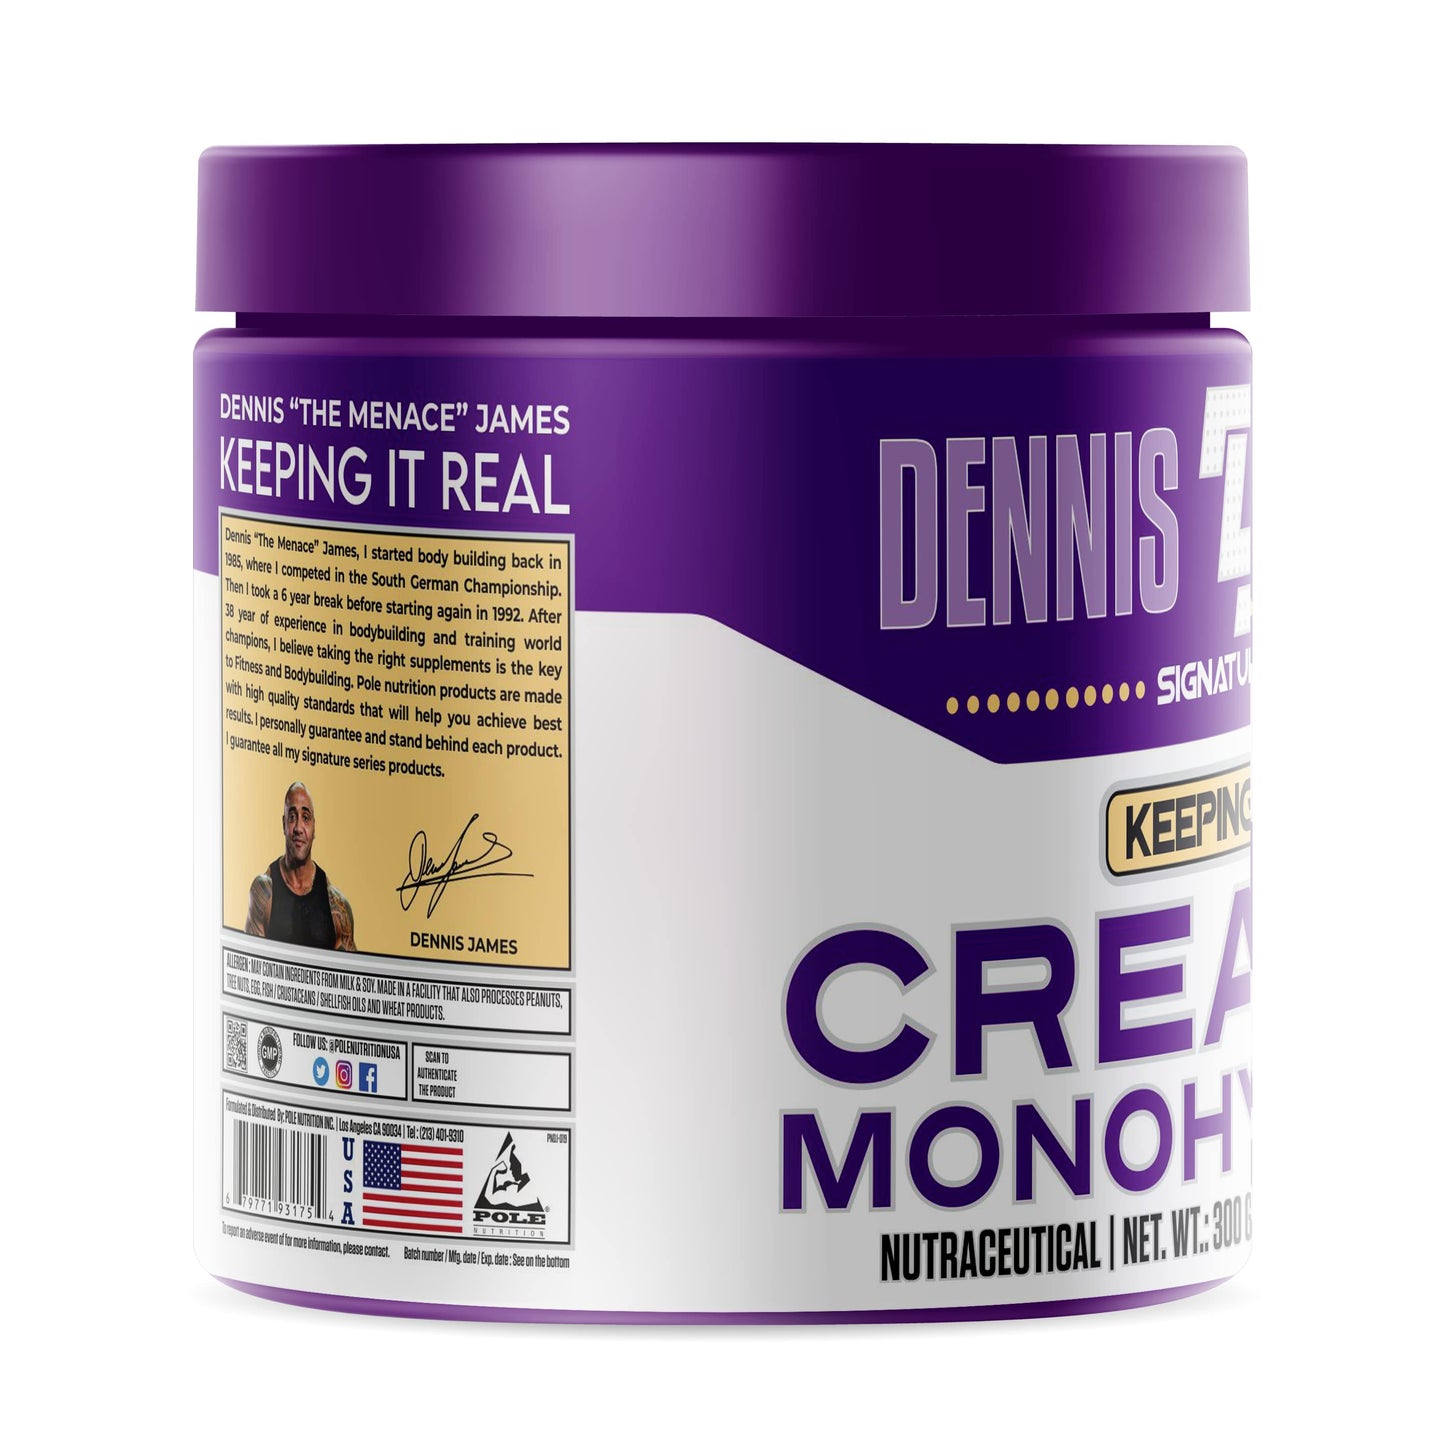 Dennis James Signature Series Creatine Monohydrate